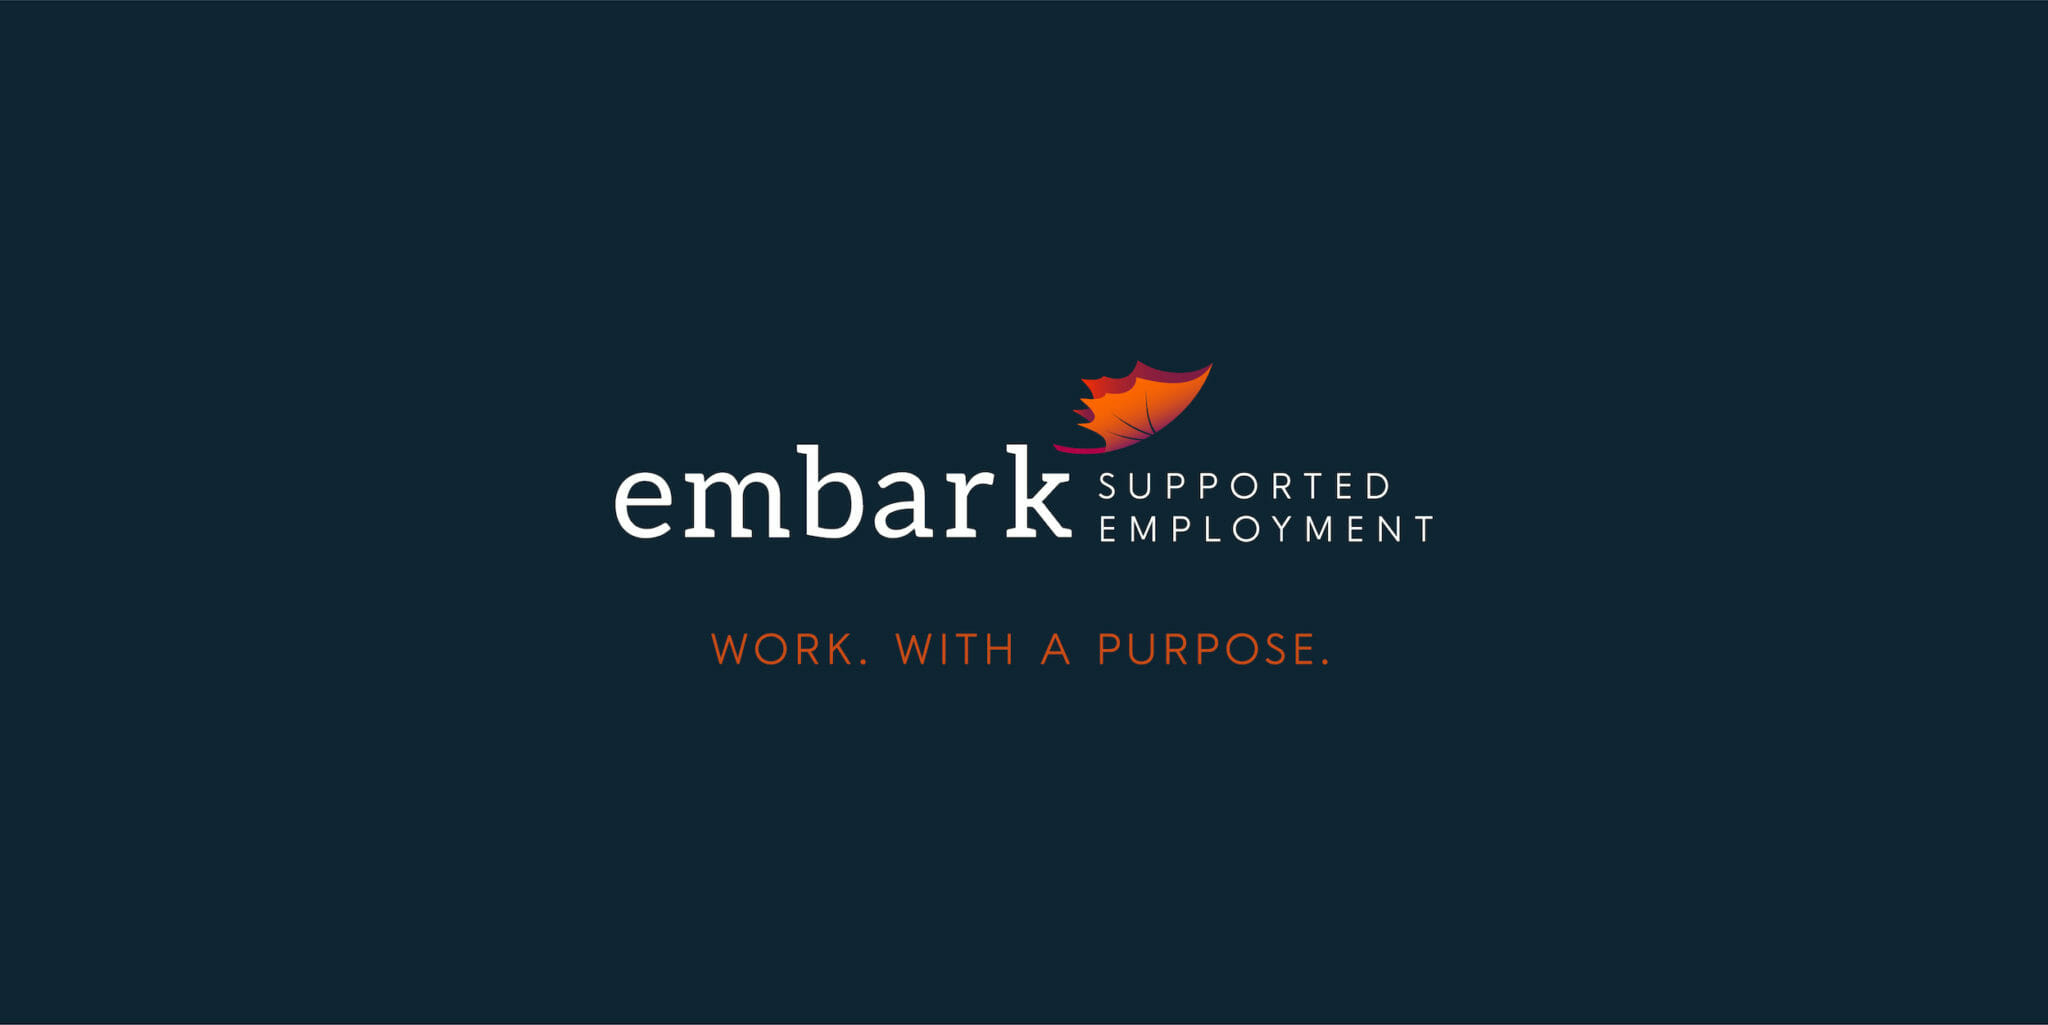 Embark Supported Employment new 2021 branding, designed by Šek Design Studio